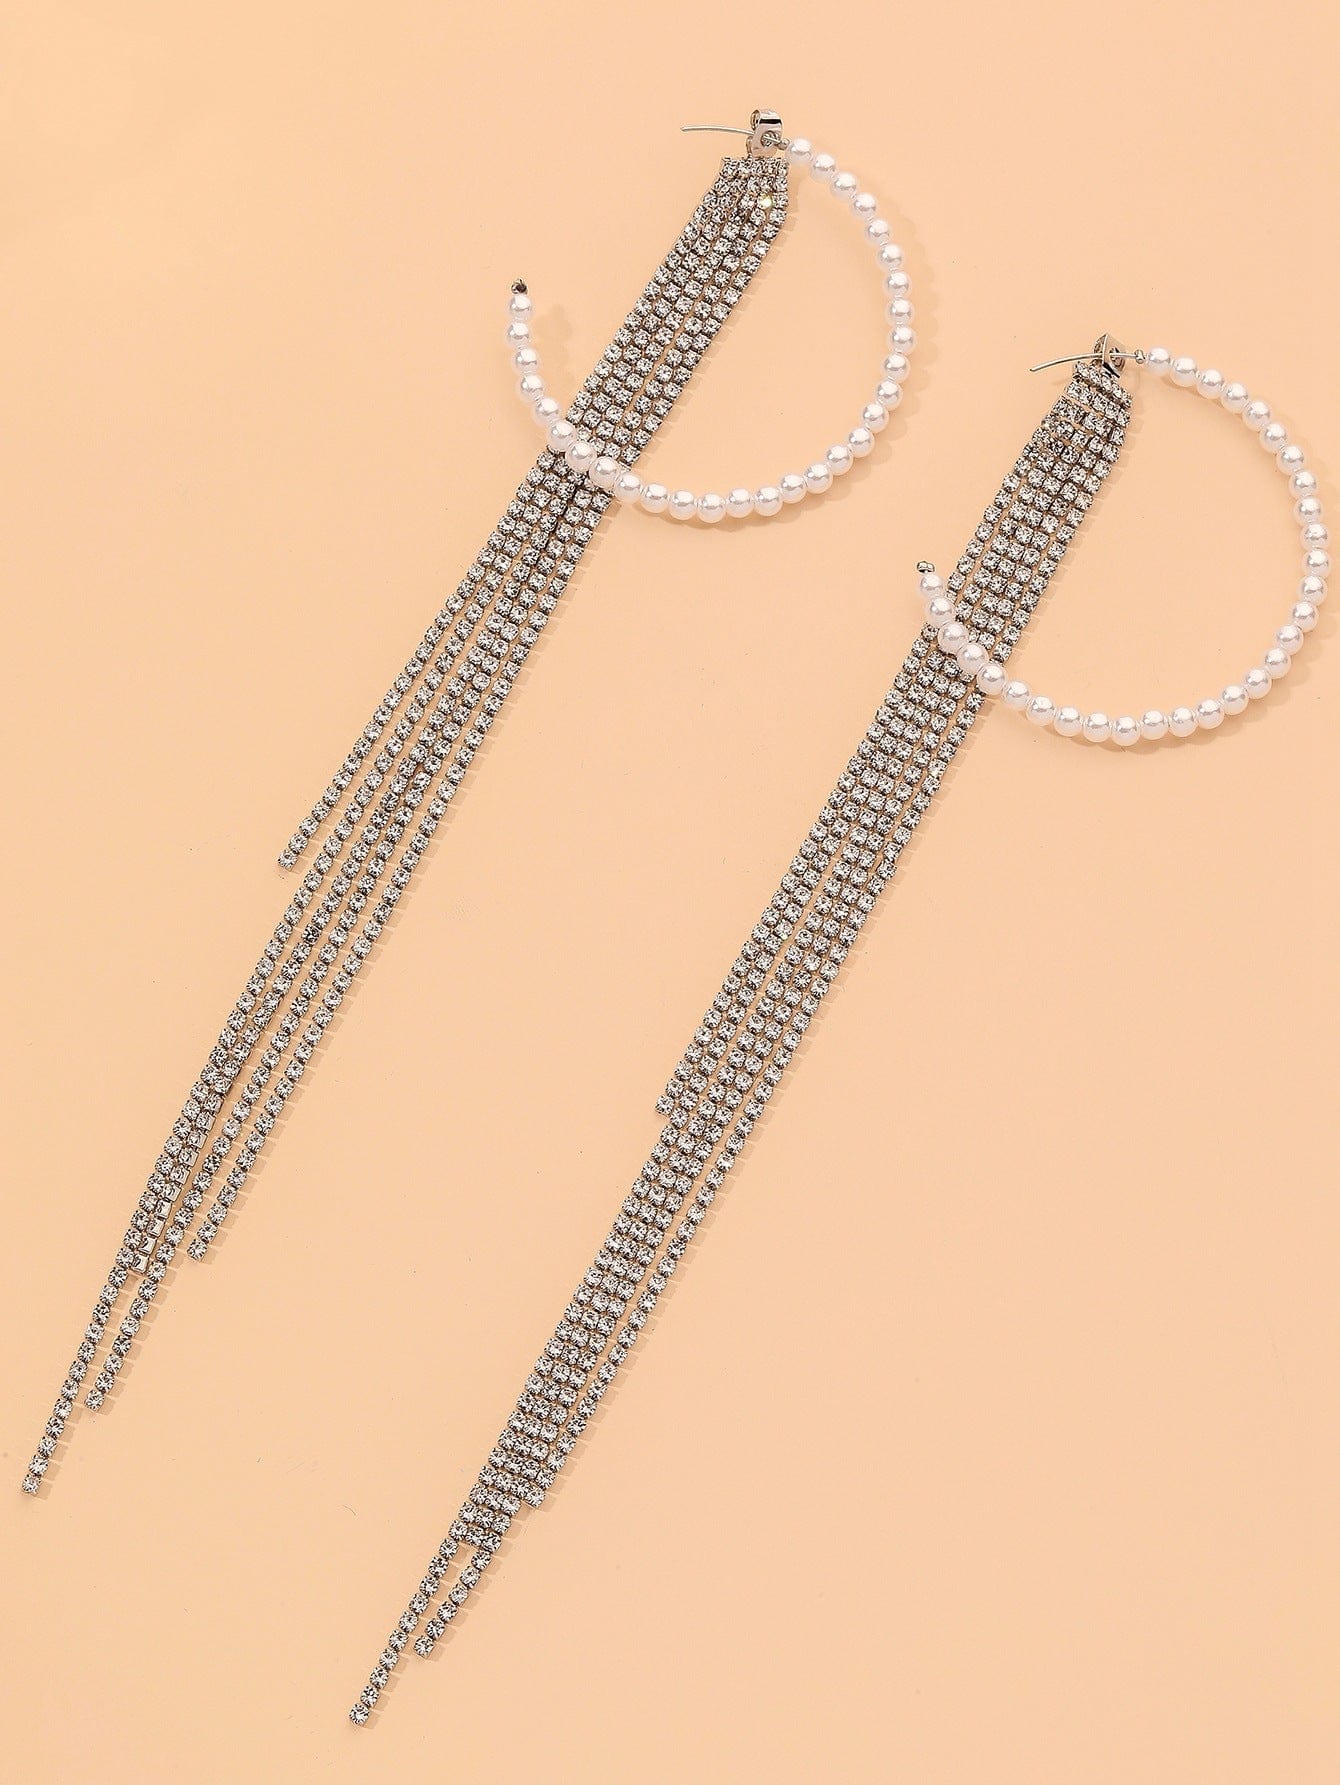 Sundaylace Creations & Bling Earring Findings 20mm Pearls Circle Hoop, with Rhinestones Long Tassel Ear nuts, Earring Findings, Basics *Sold in pair*